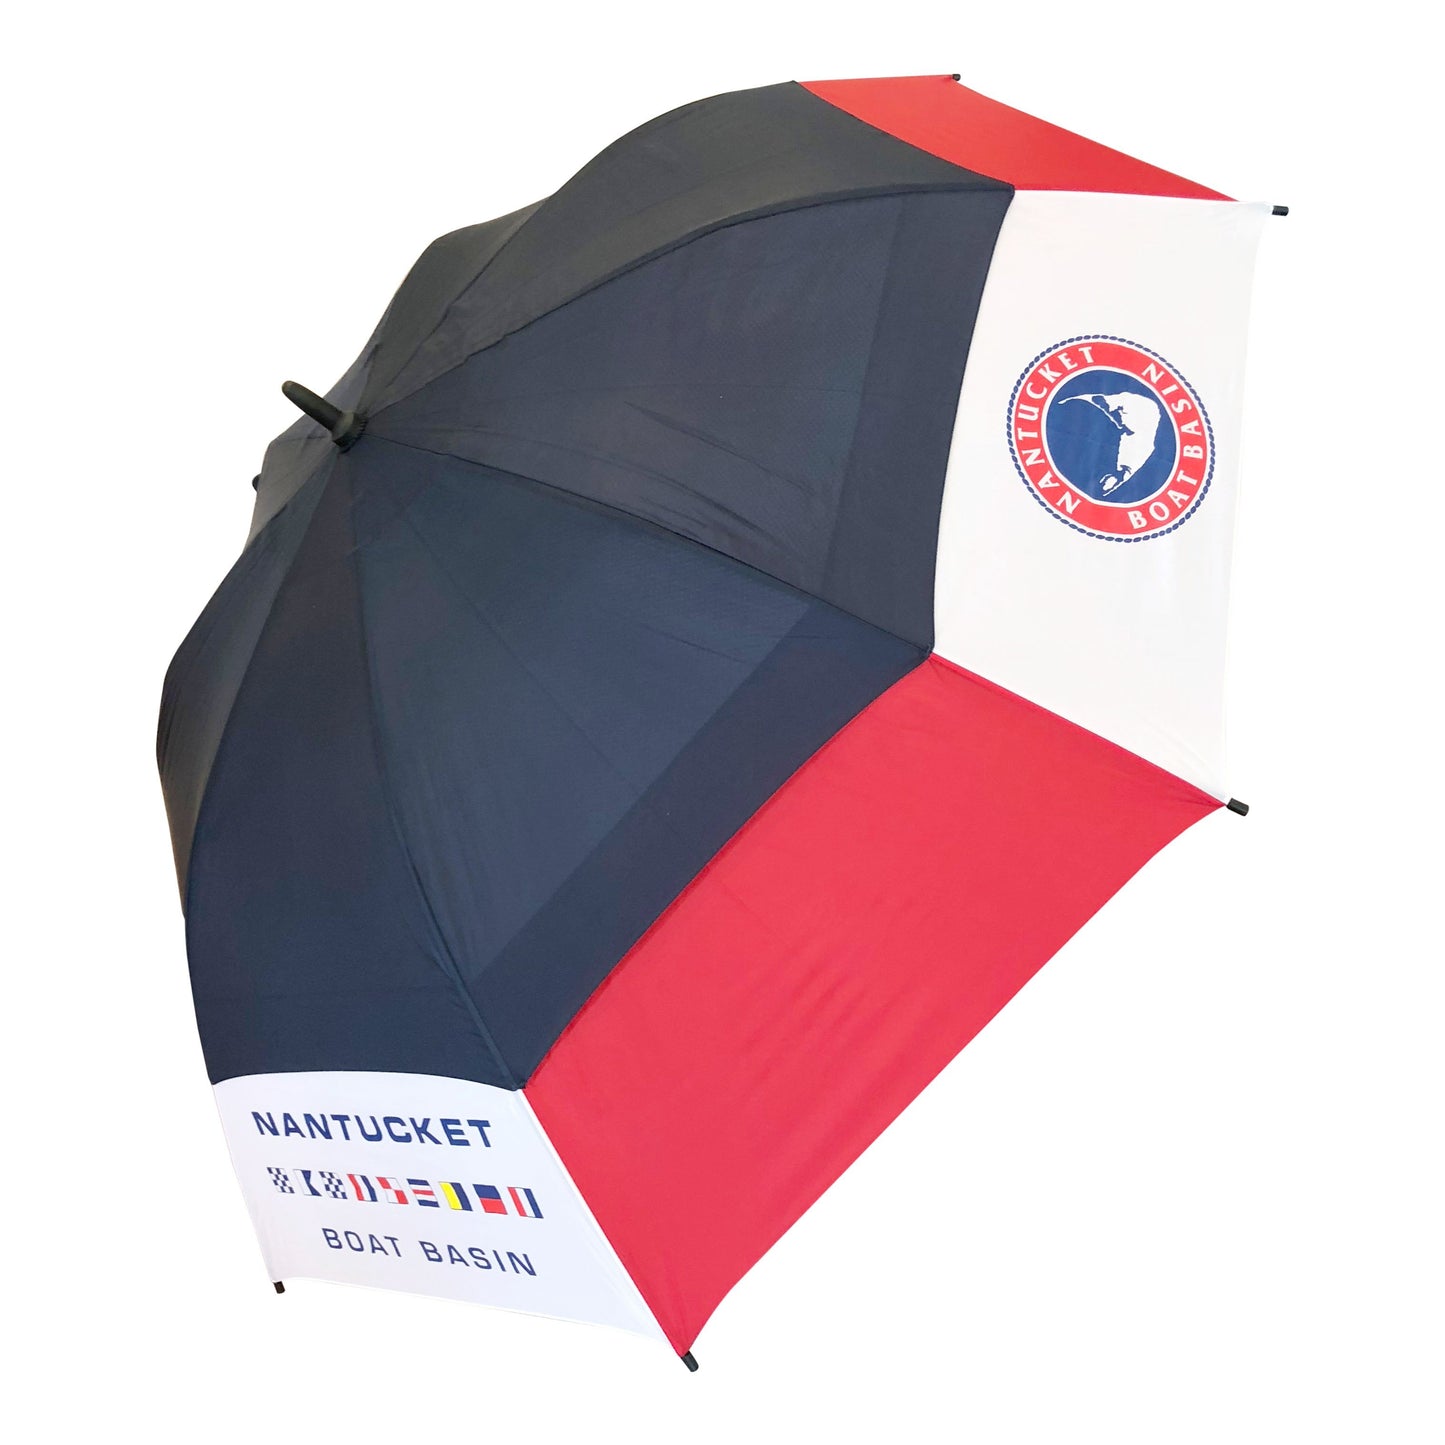 Nantucket Boat Basin Windbrella 62 Auto Umbrella